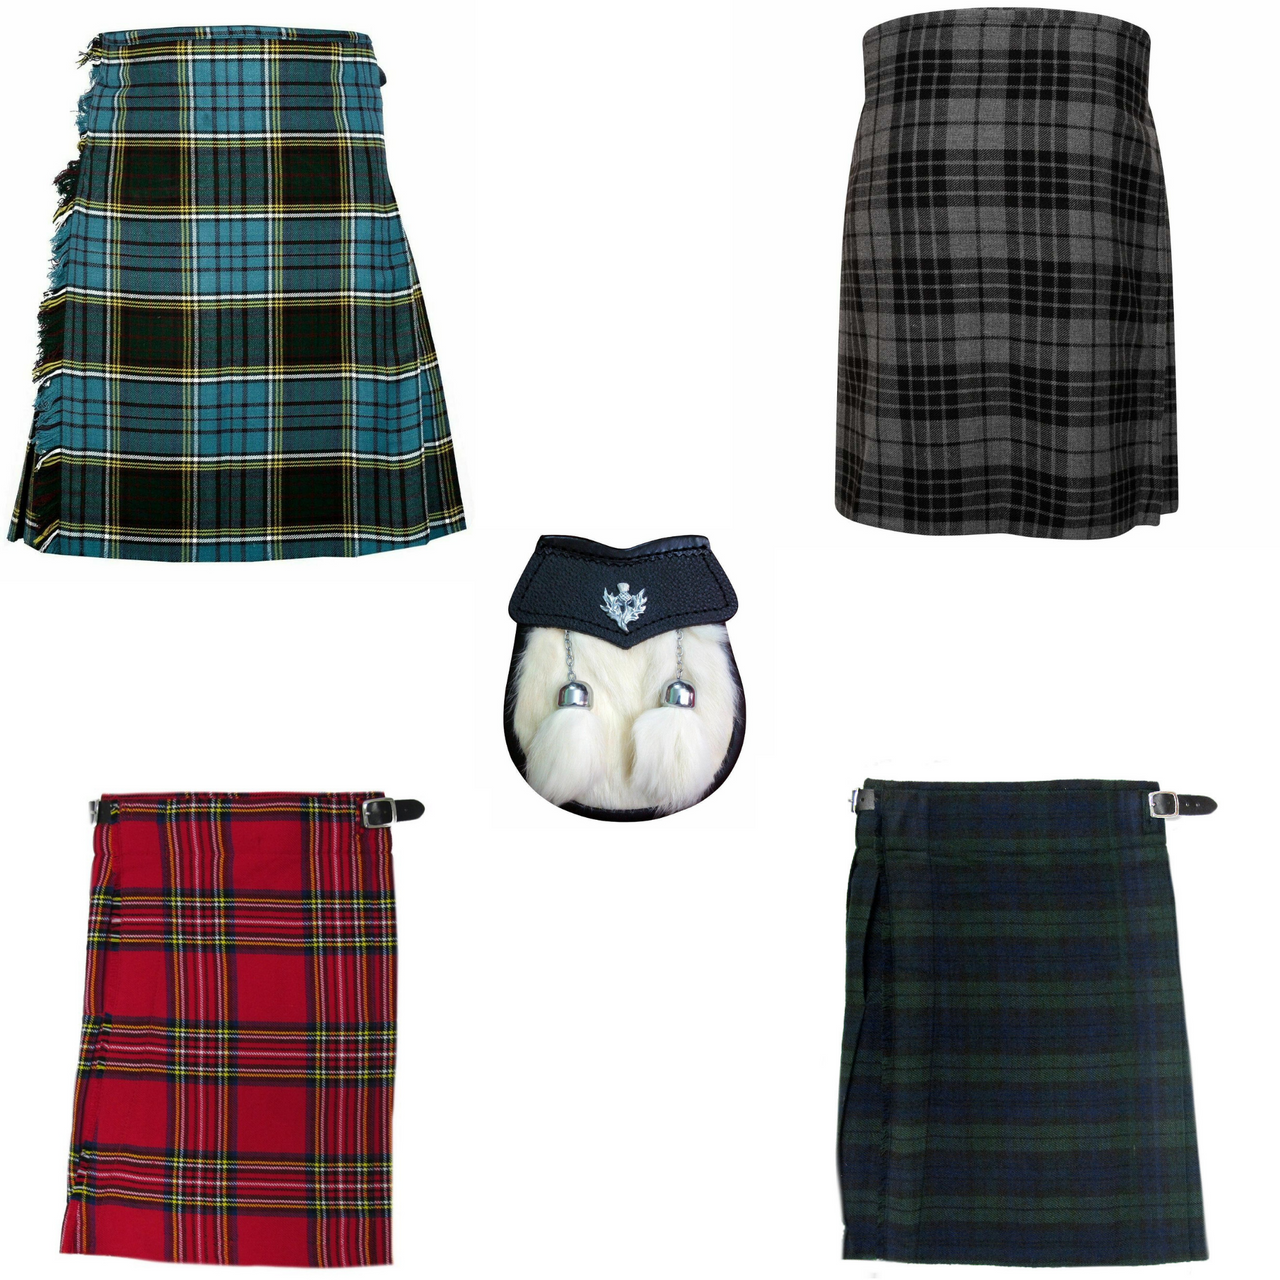 Kids Scottish Tartan Kilt Outfit With White Sporran Fur with 2 Tassels & Thistle Badge